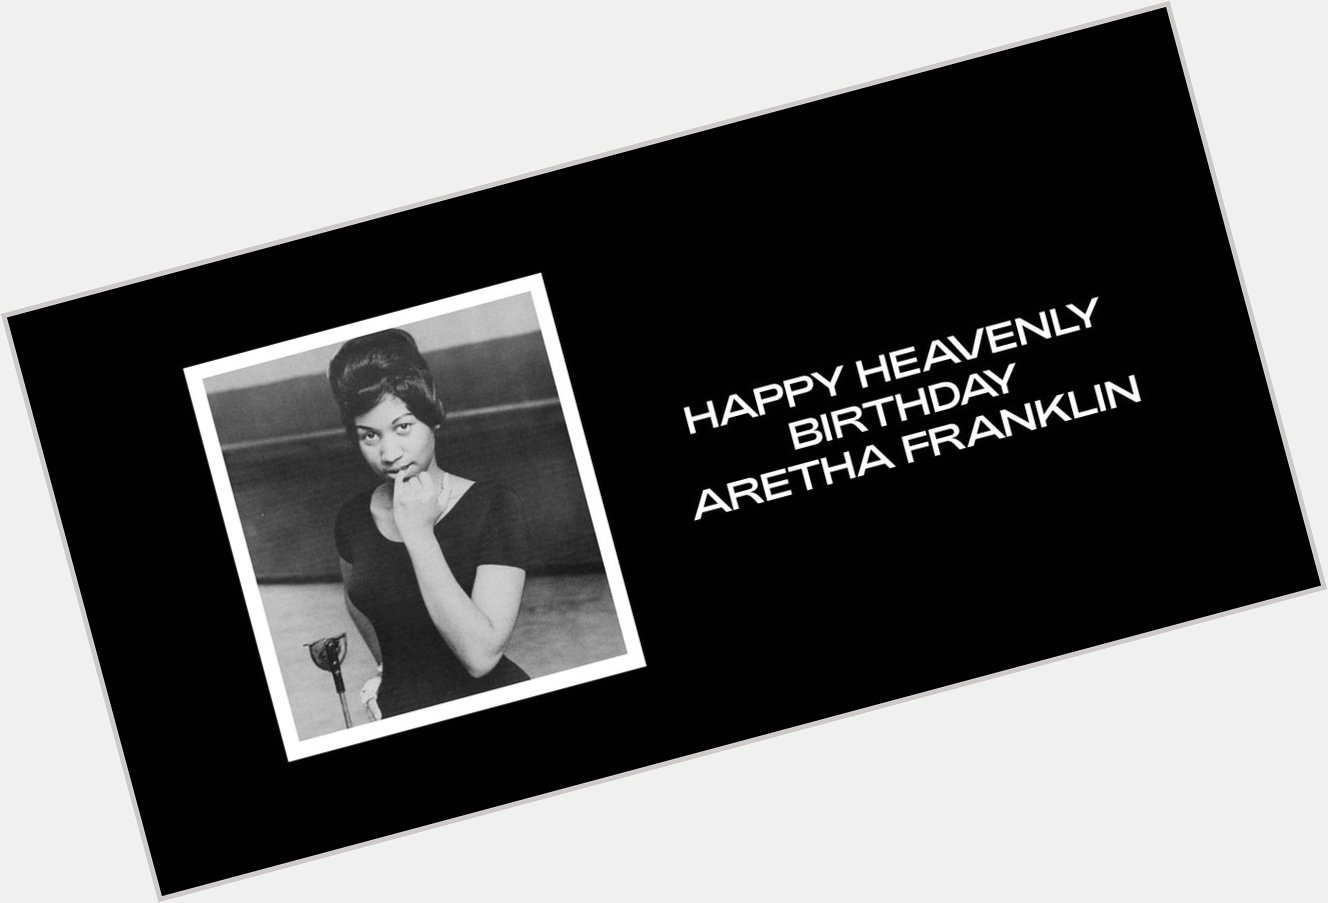  Happy Heavenly Birthday Aretha Franklin  